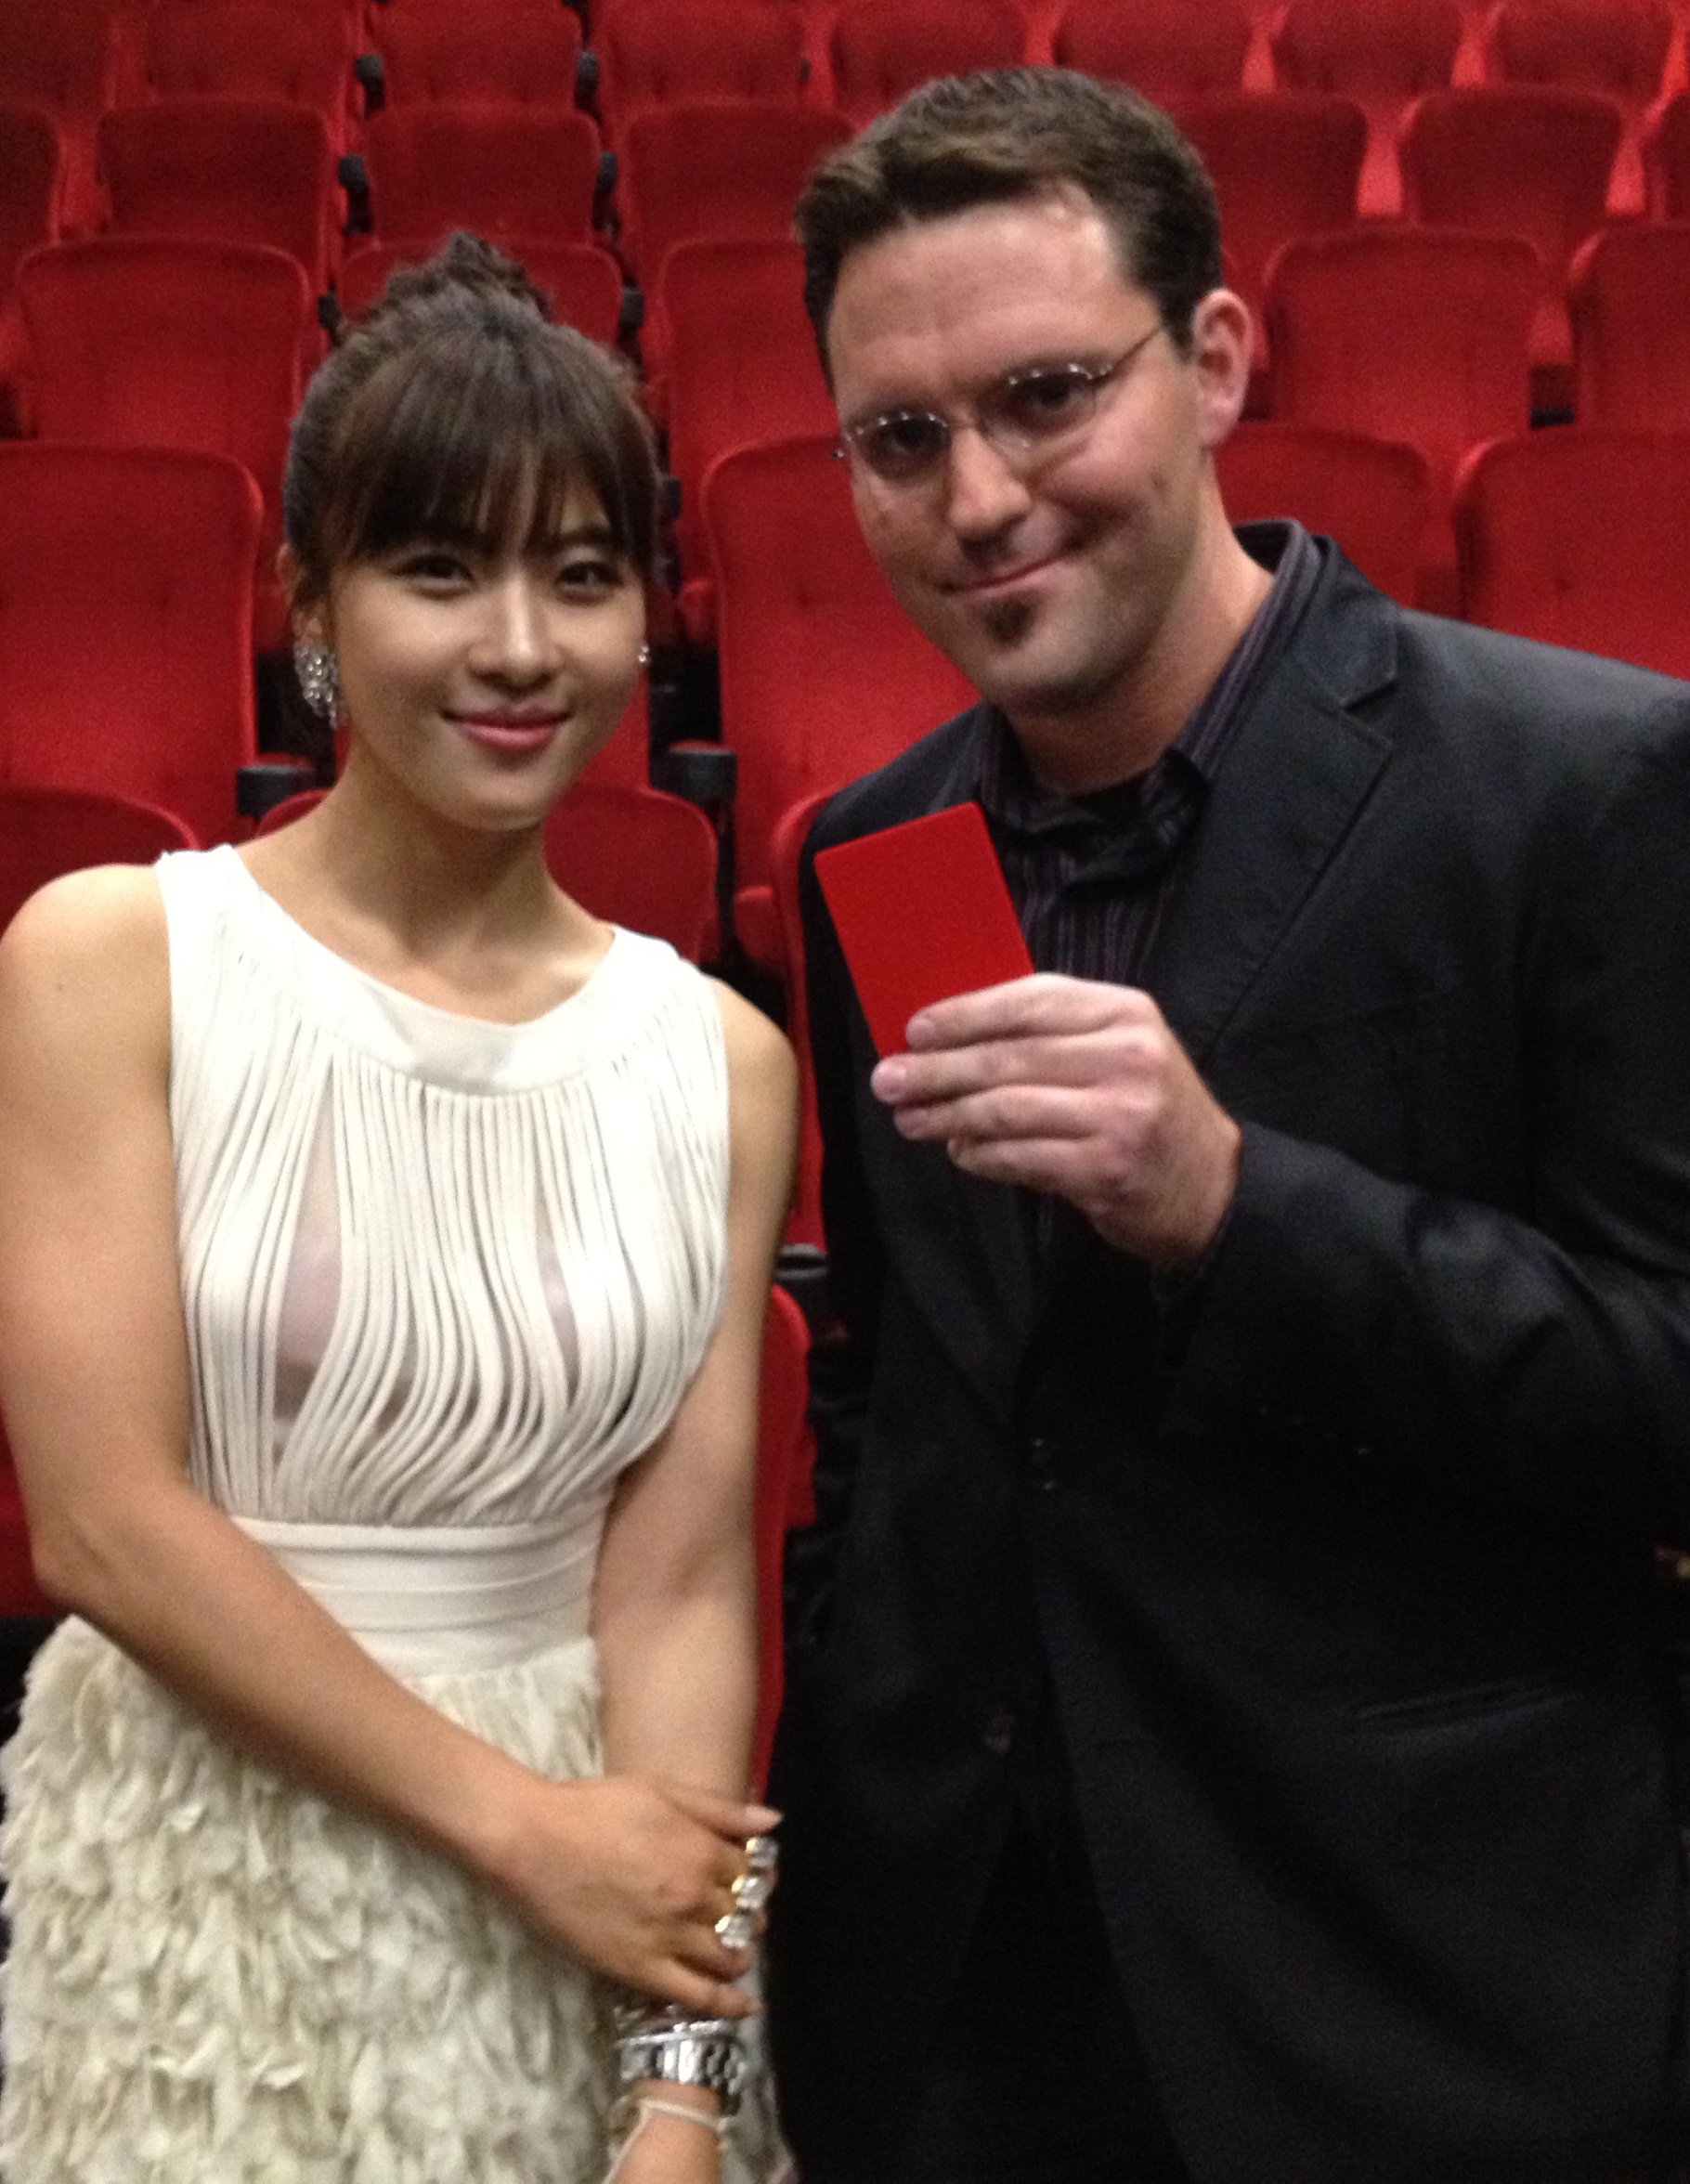 With Ha Ji-won June 5, 2012 at Los Angeles premiere of 